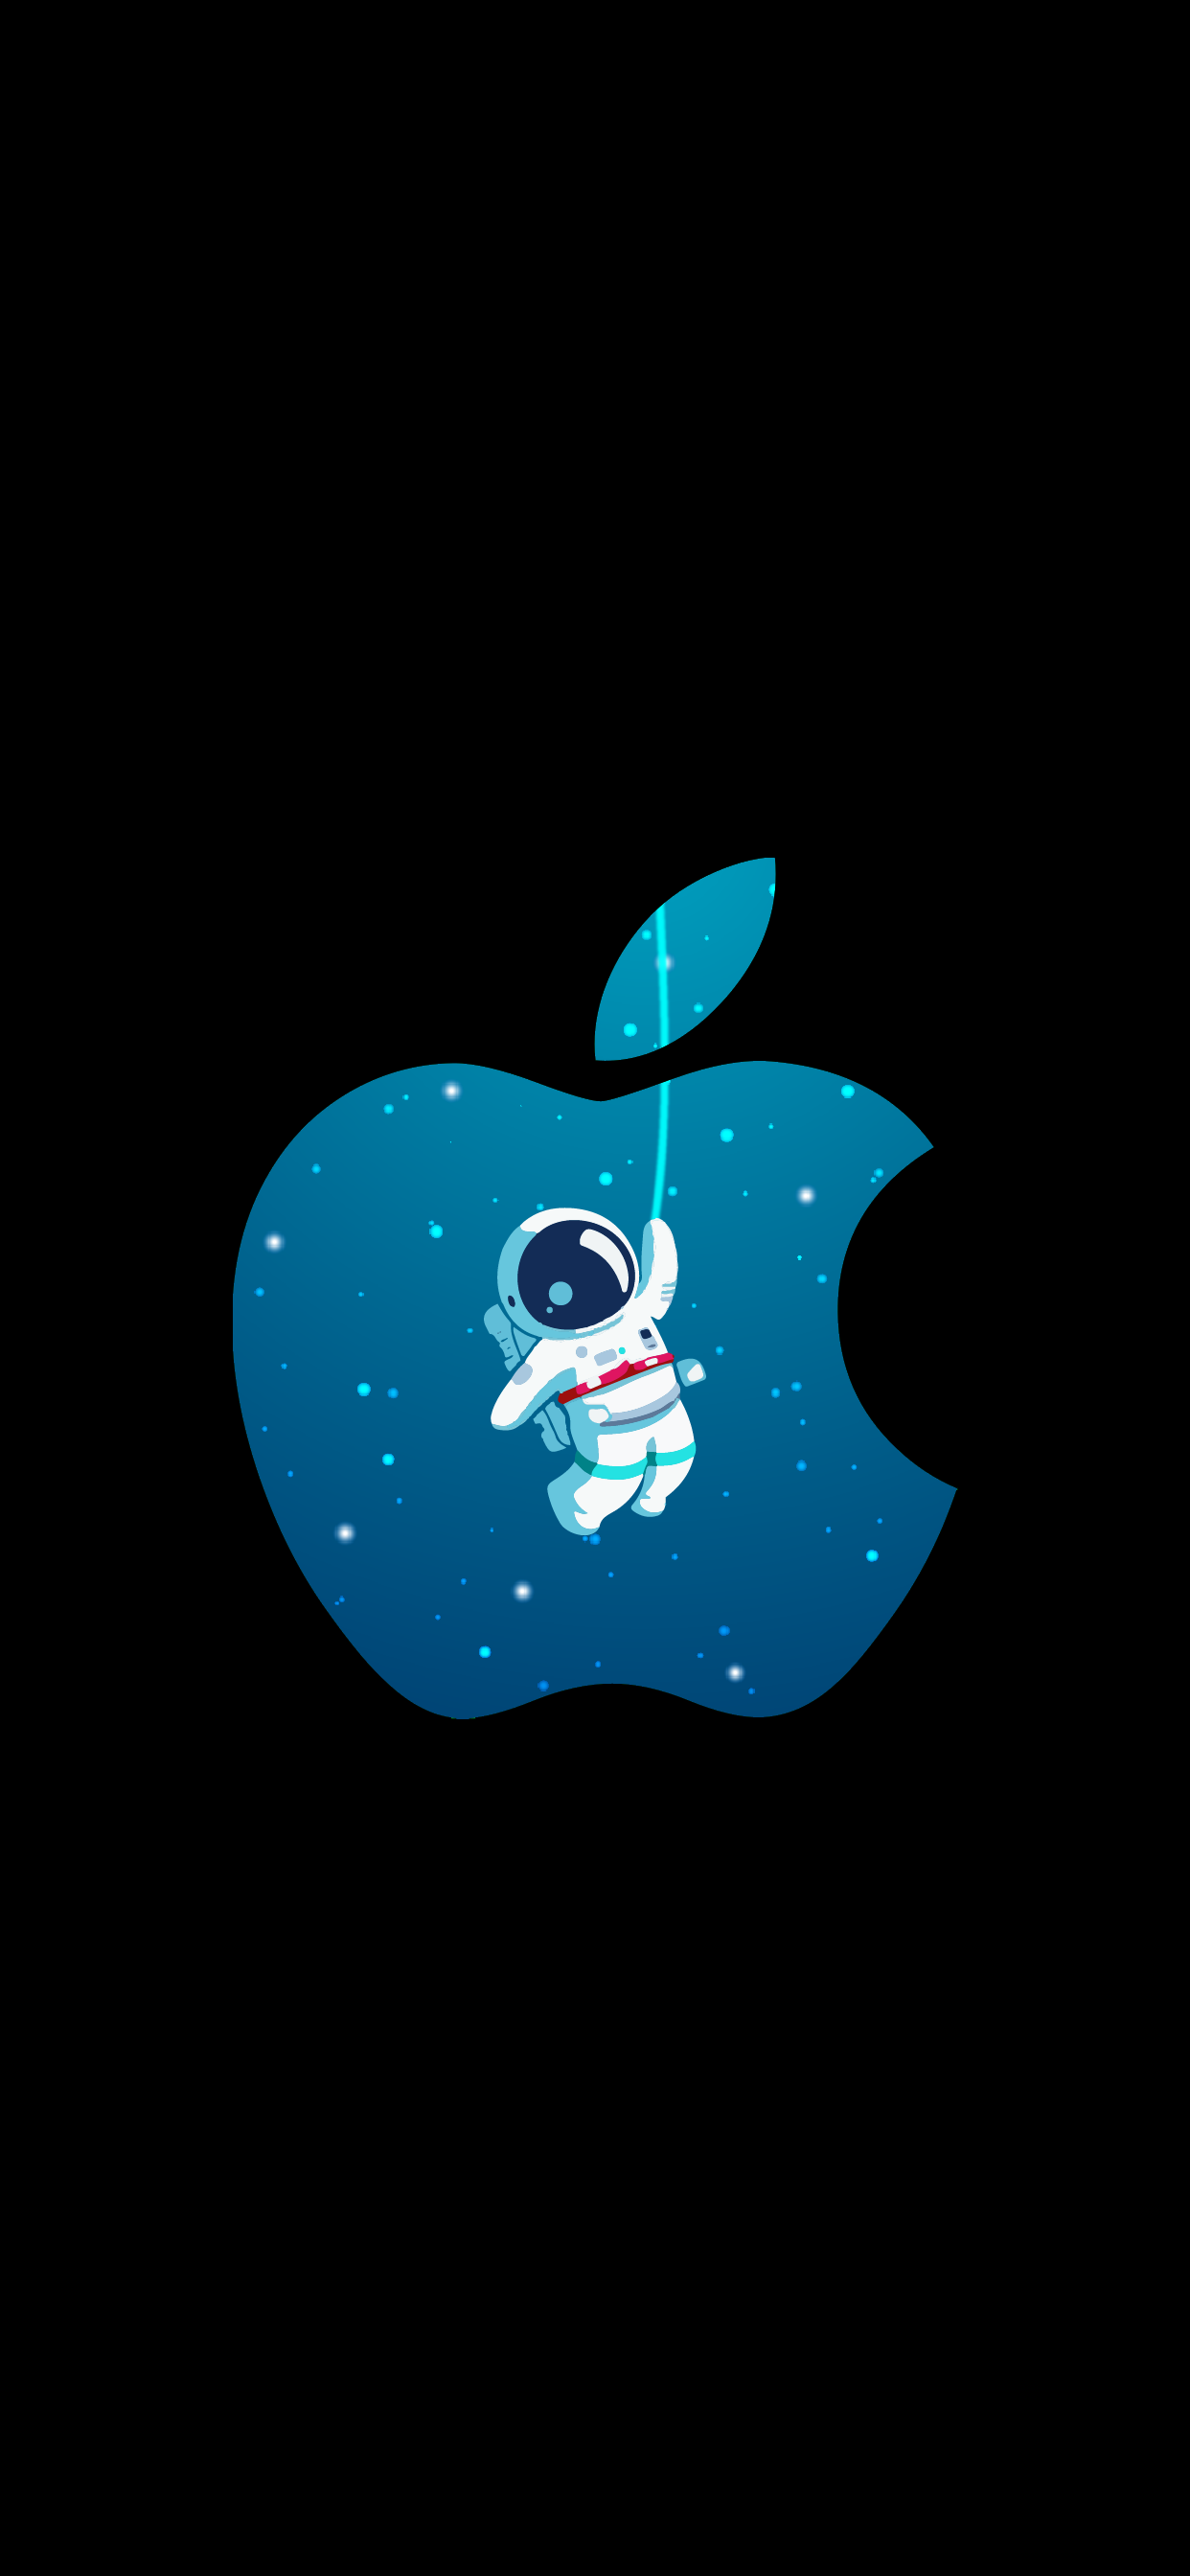 astronaut cute logo apple iphone wallpaper